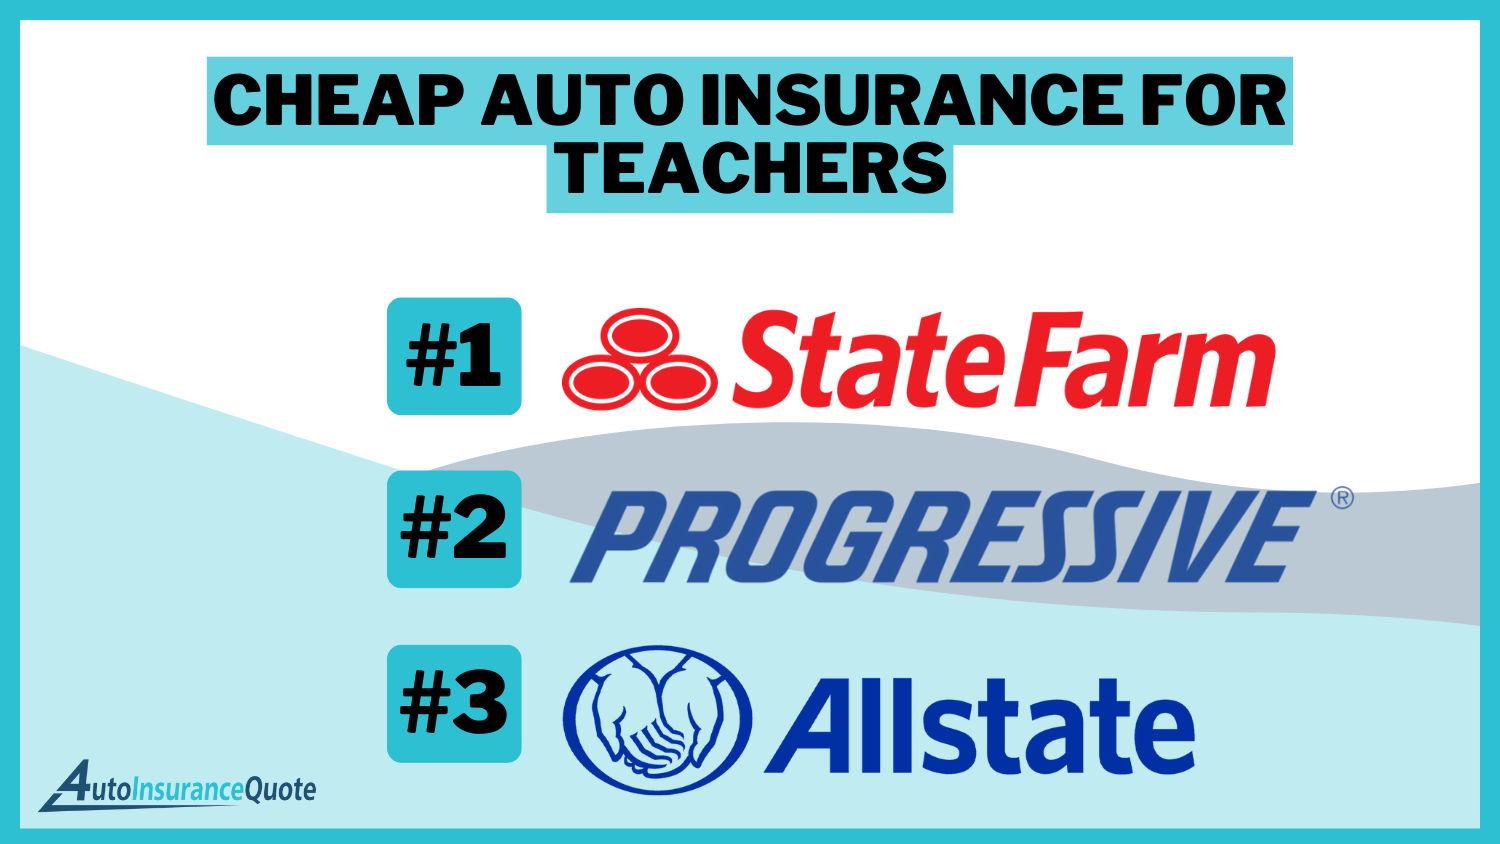 Cheap Auto Insurance for Teachers: State Farm, Progressive, and Allstate